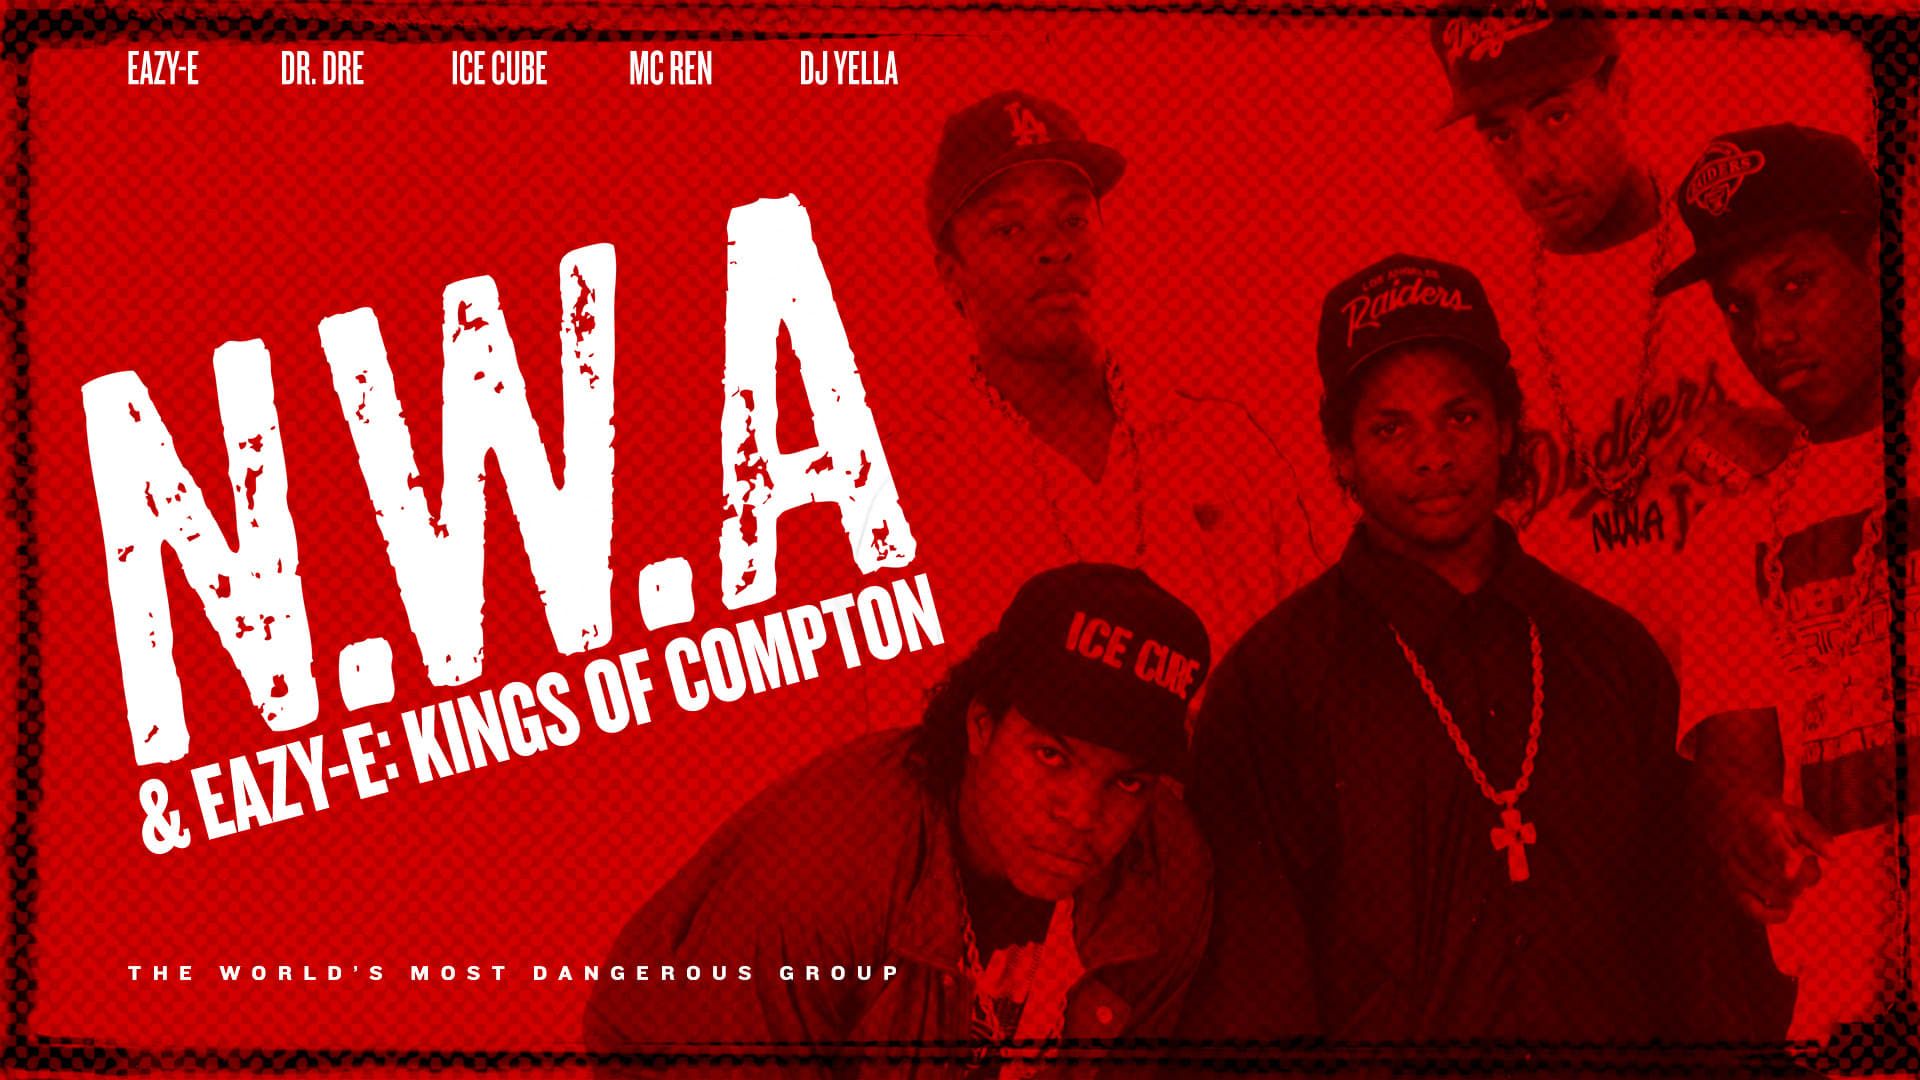 NWA & Eazy-E: Kings of Compton background